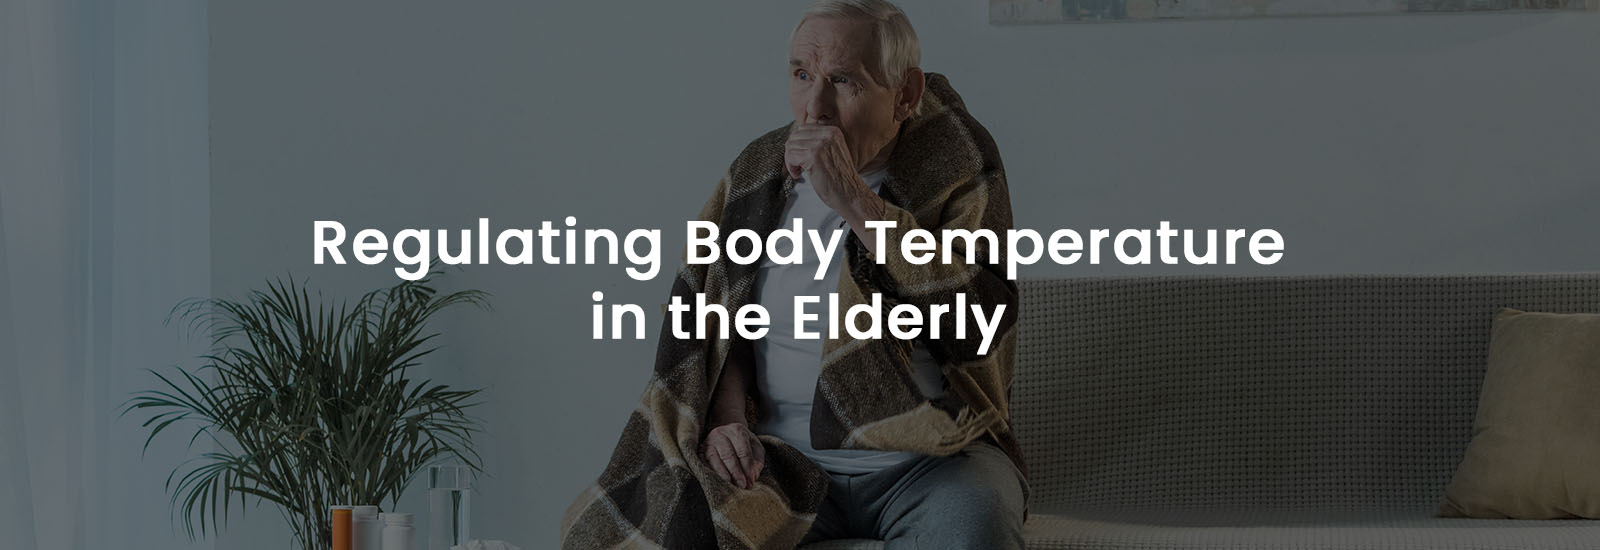 Regulating Body Temperature in the Elderly | Banner Image